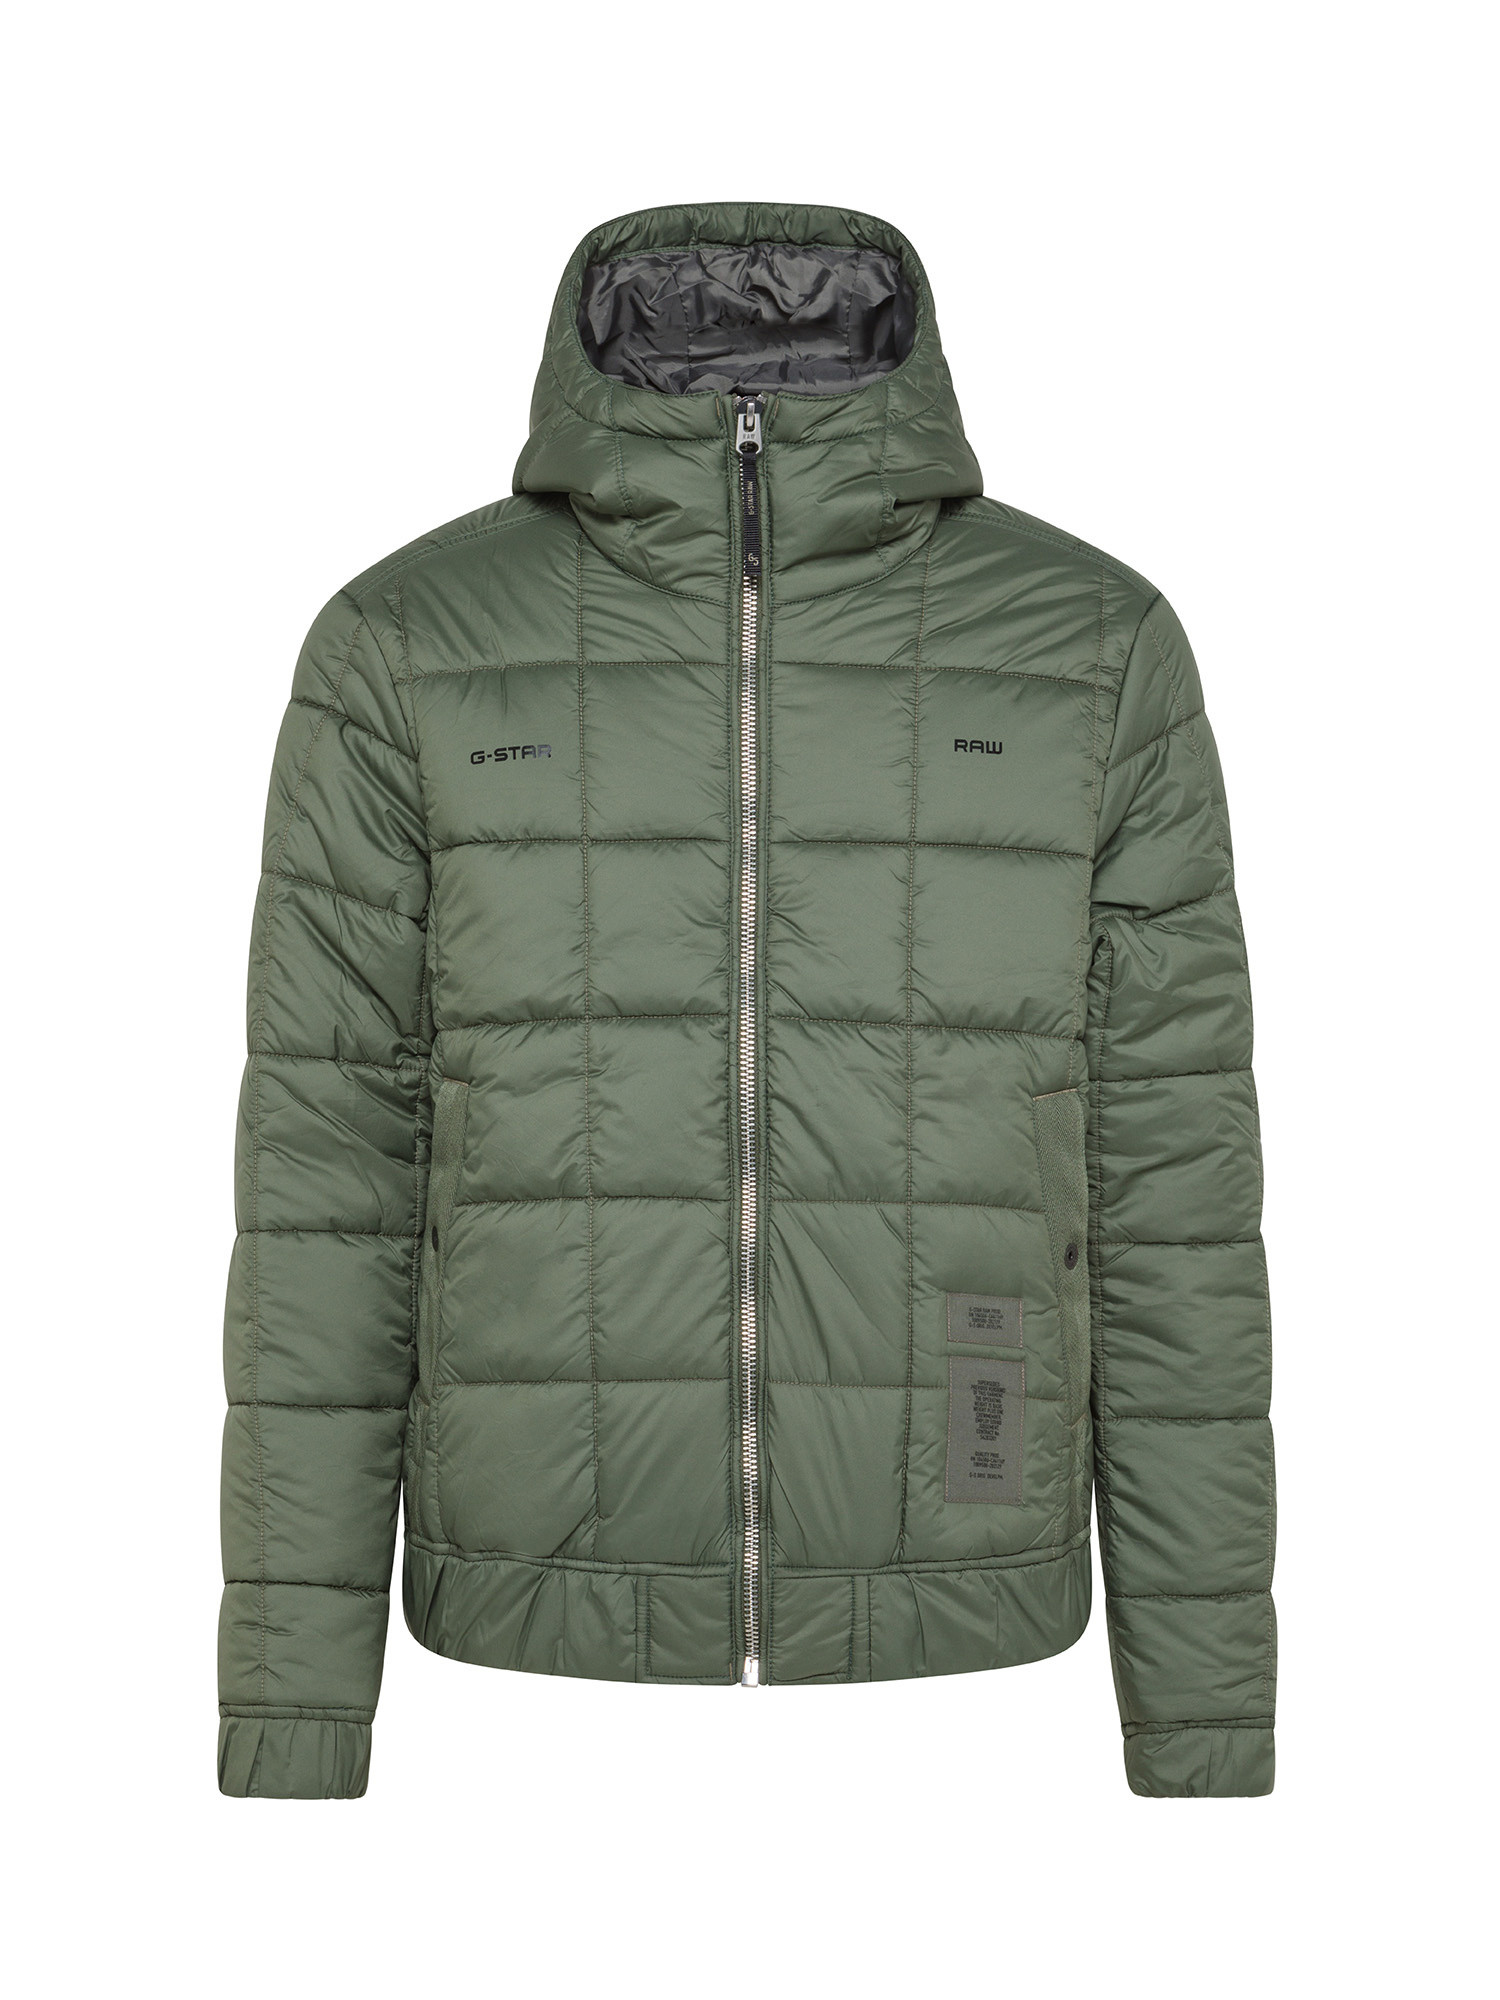 G-Star - Hooded down jacket, Olive Green, large image number 0